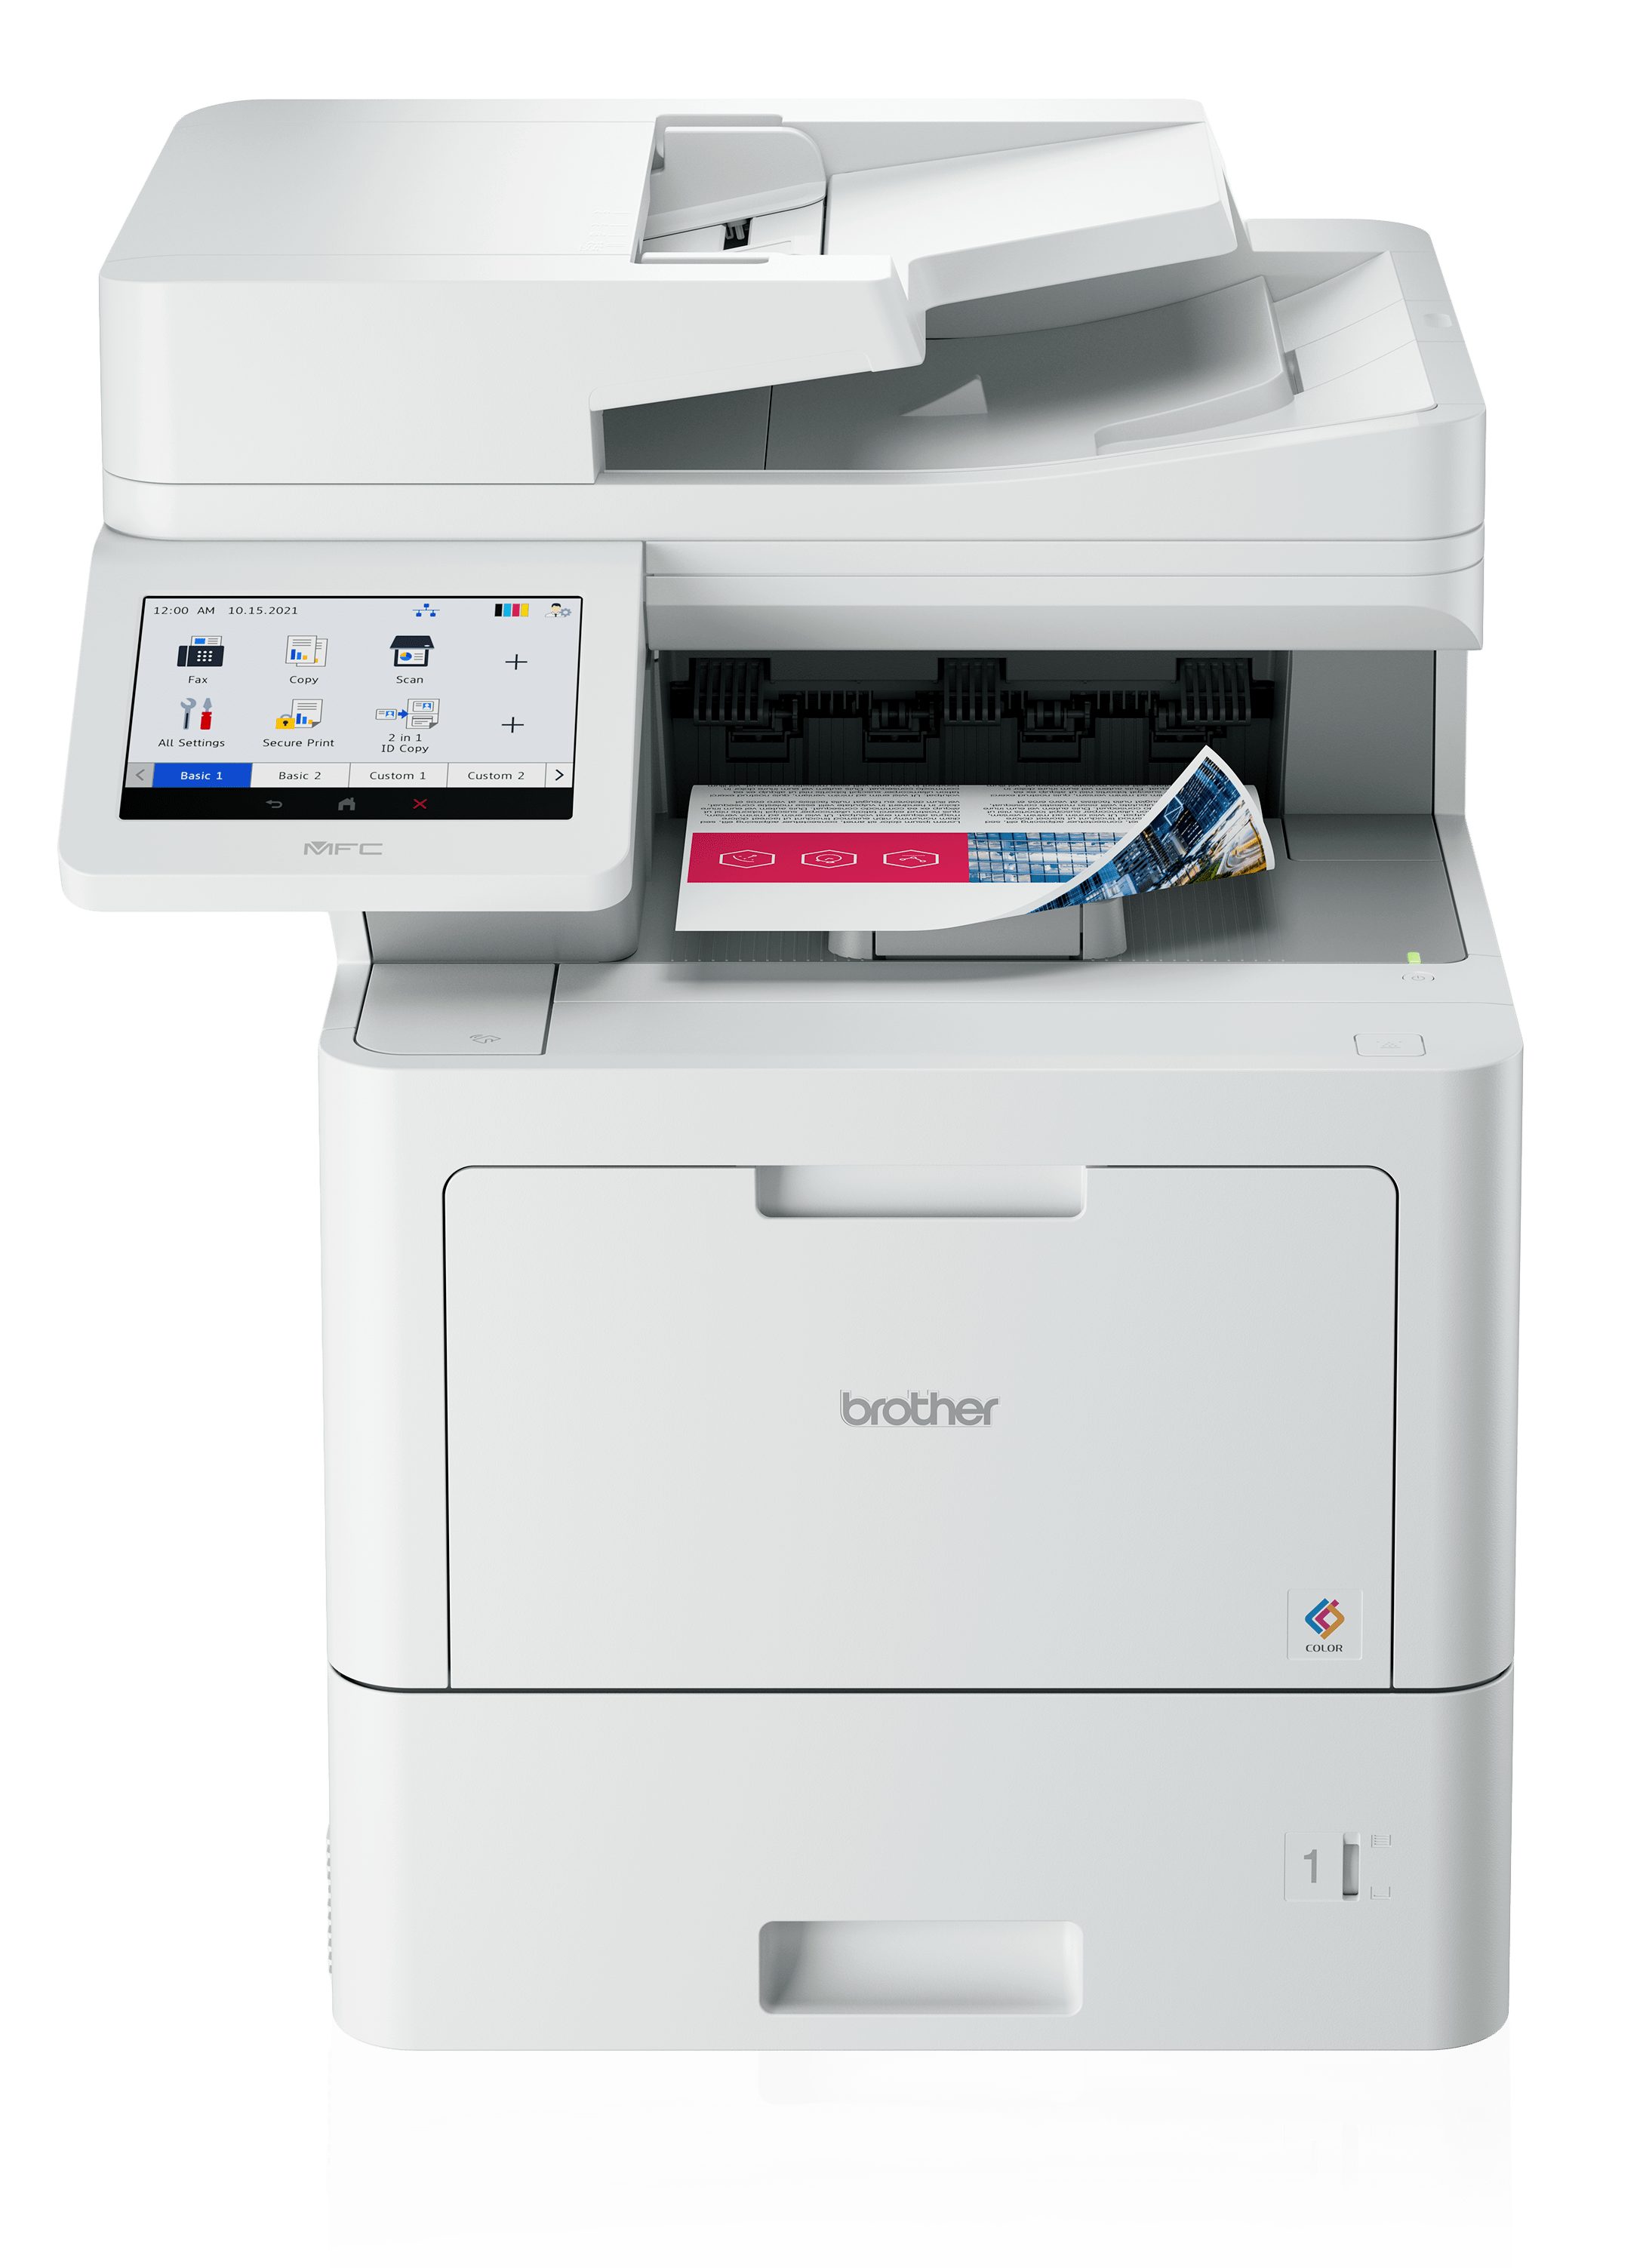 MFC printer